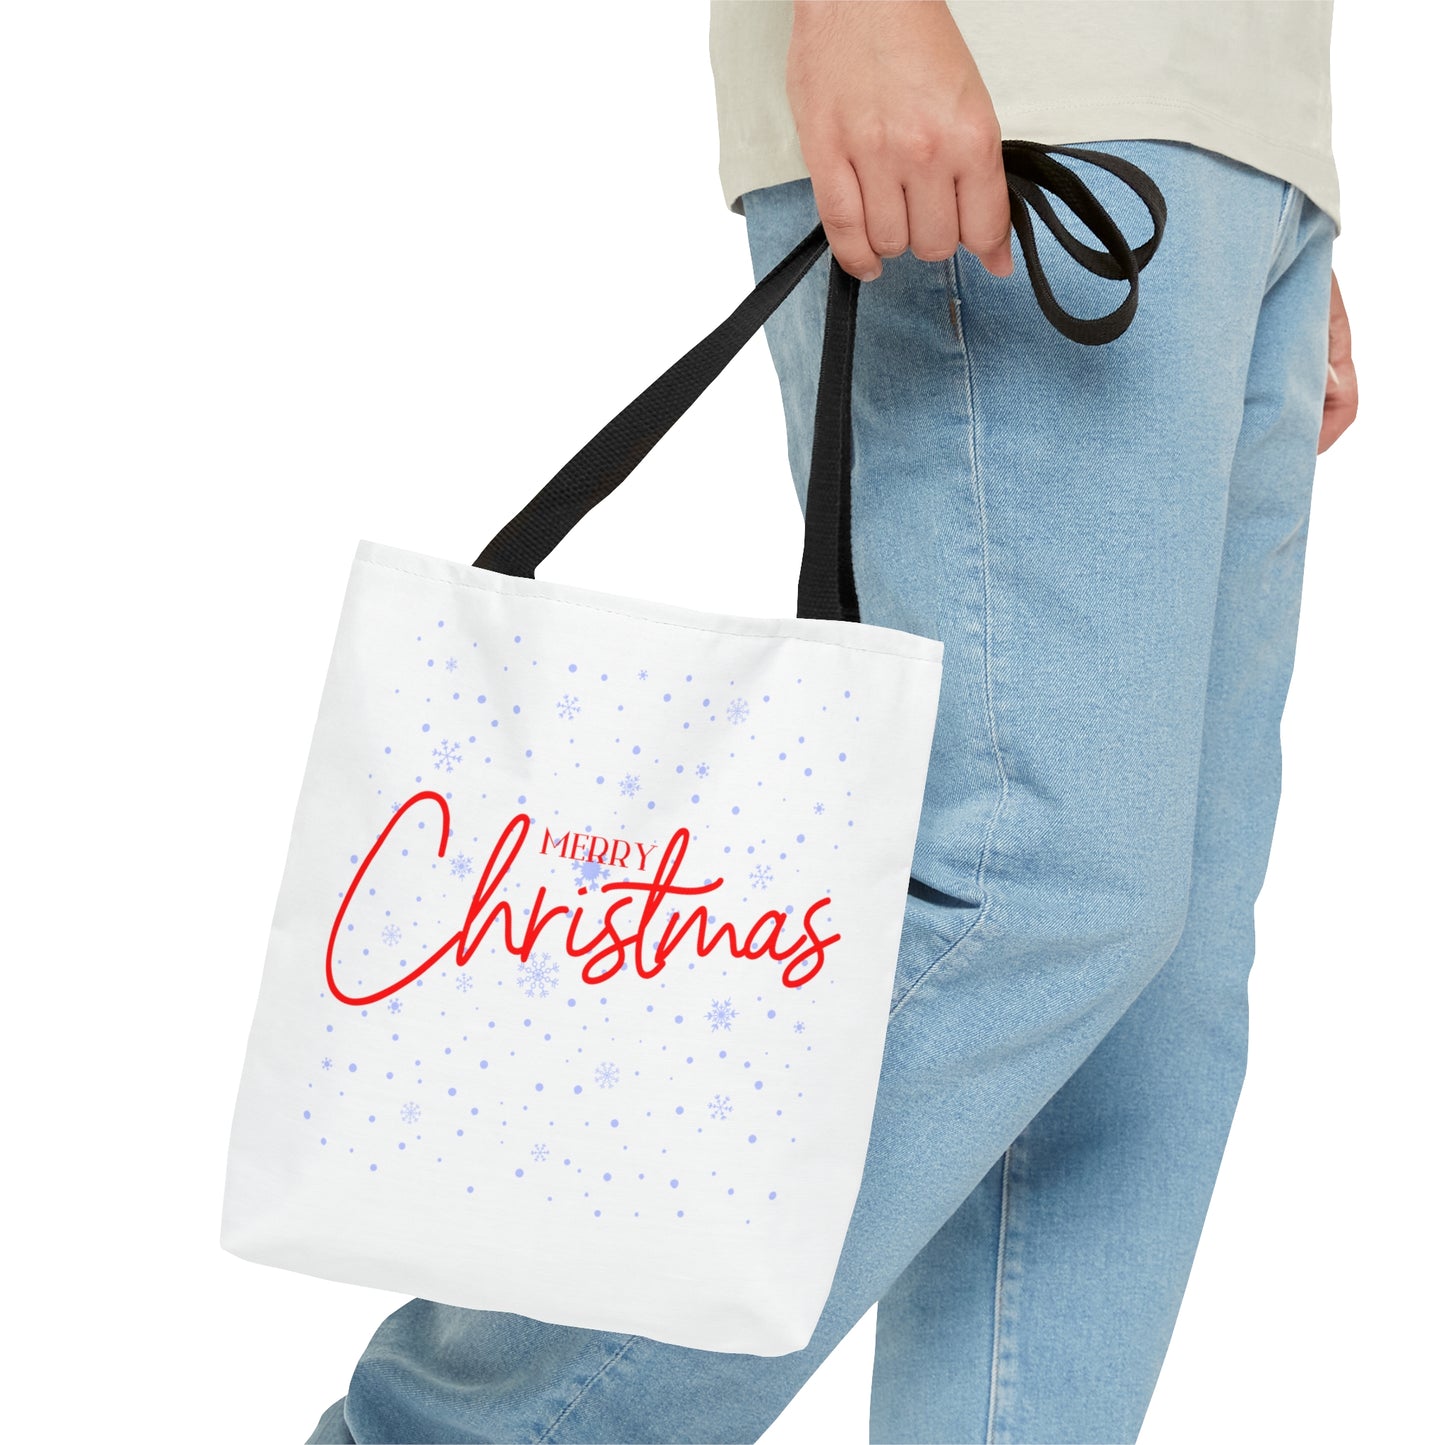 Merry Christmas Printed Tote Bags, Reusable Tote Bags